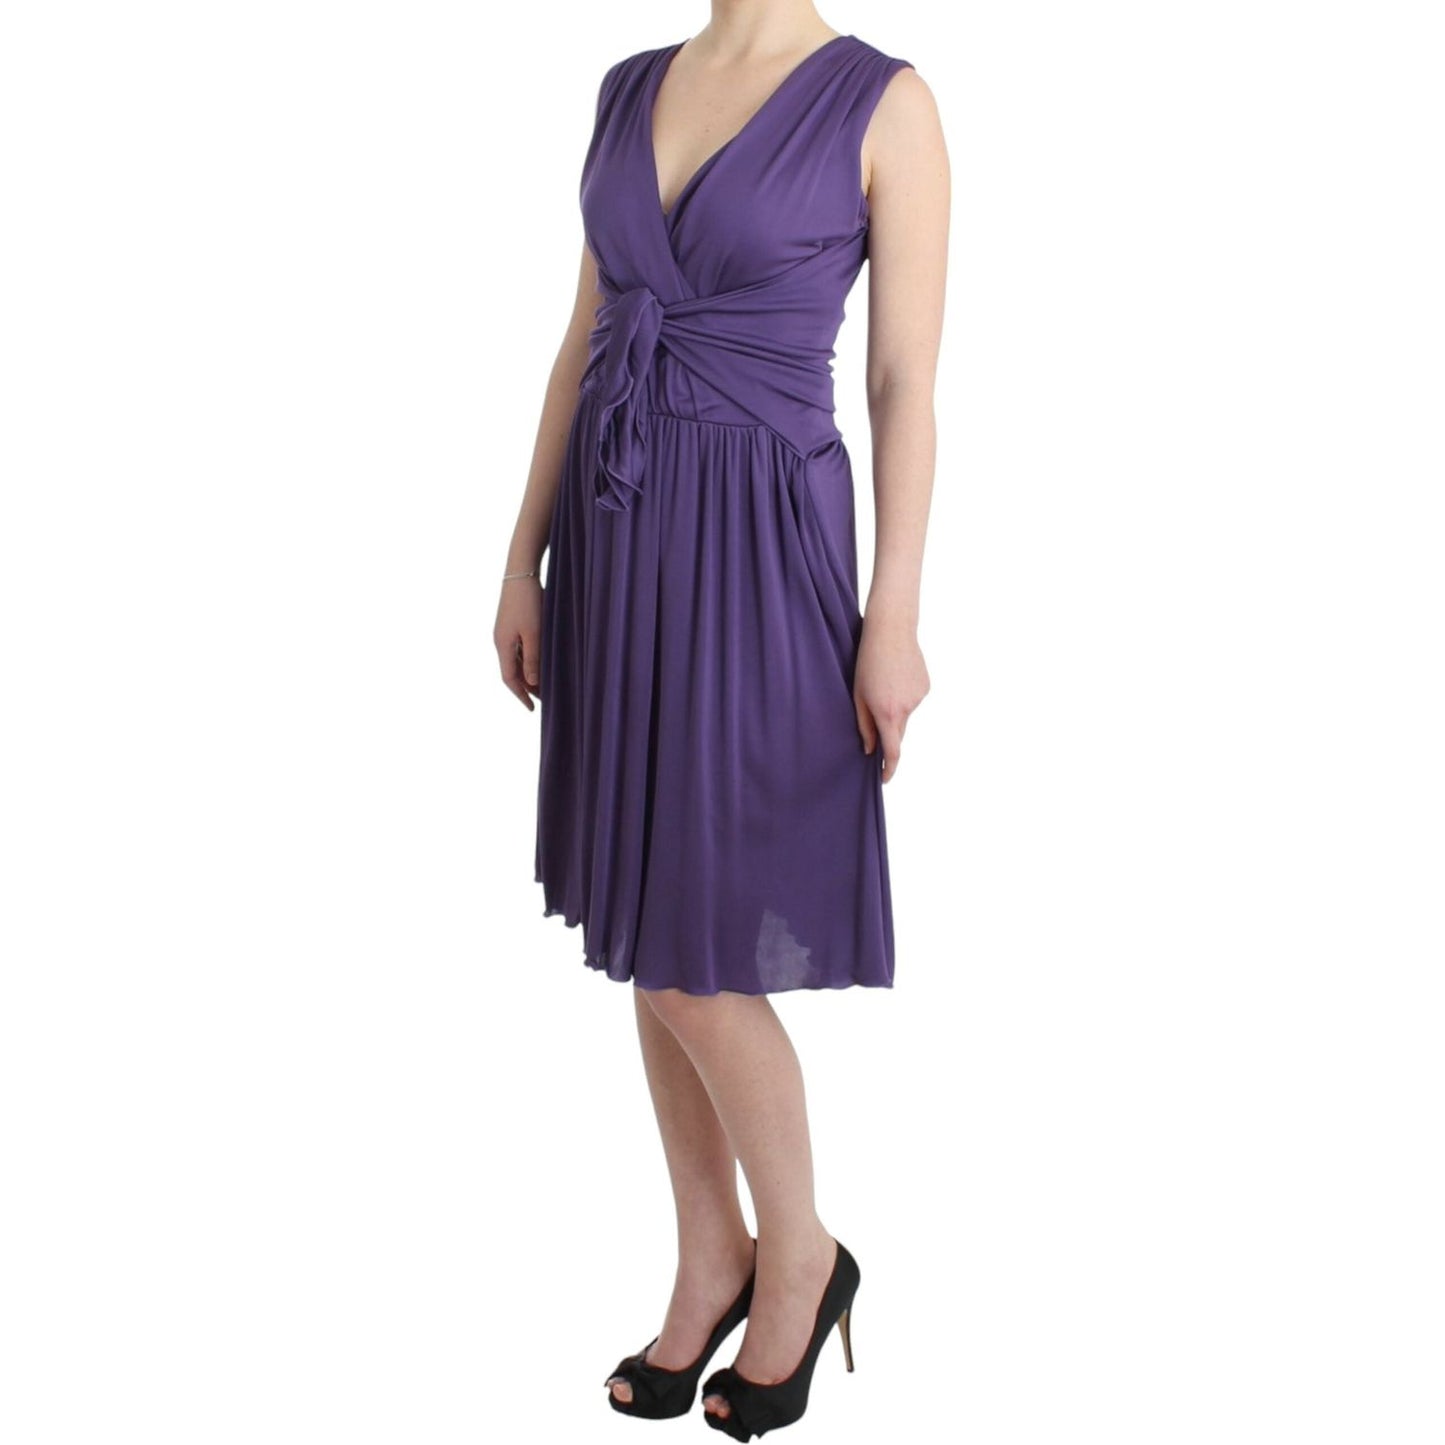 John Galliano Elegant Purple Knee-Length Jersey Dress purple-sheath-dress 6952-purple-sheath-dress-1-scaled-4457ab4c-4e2.jpg